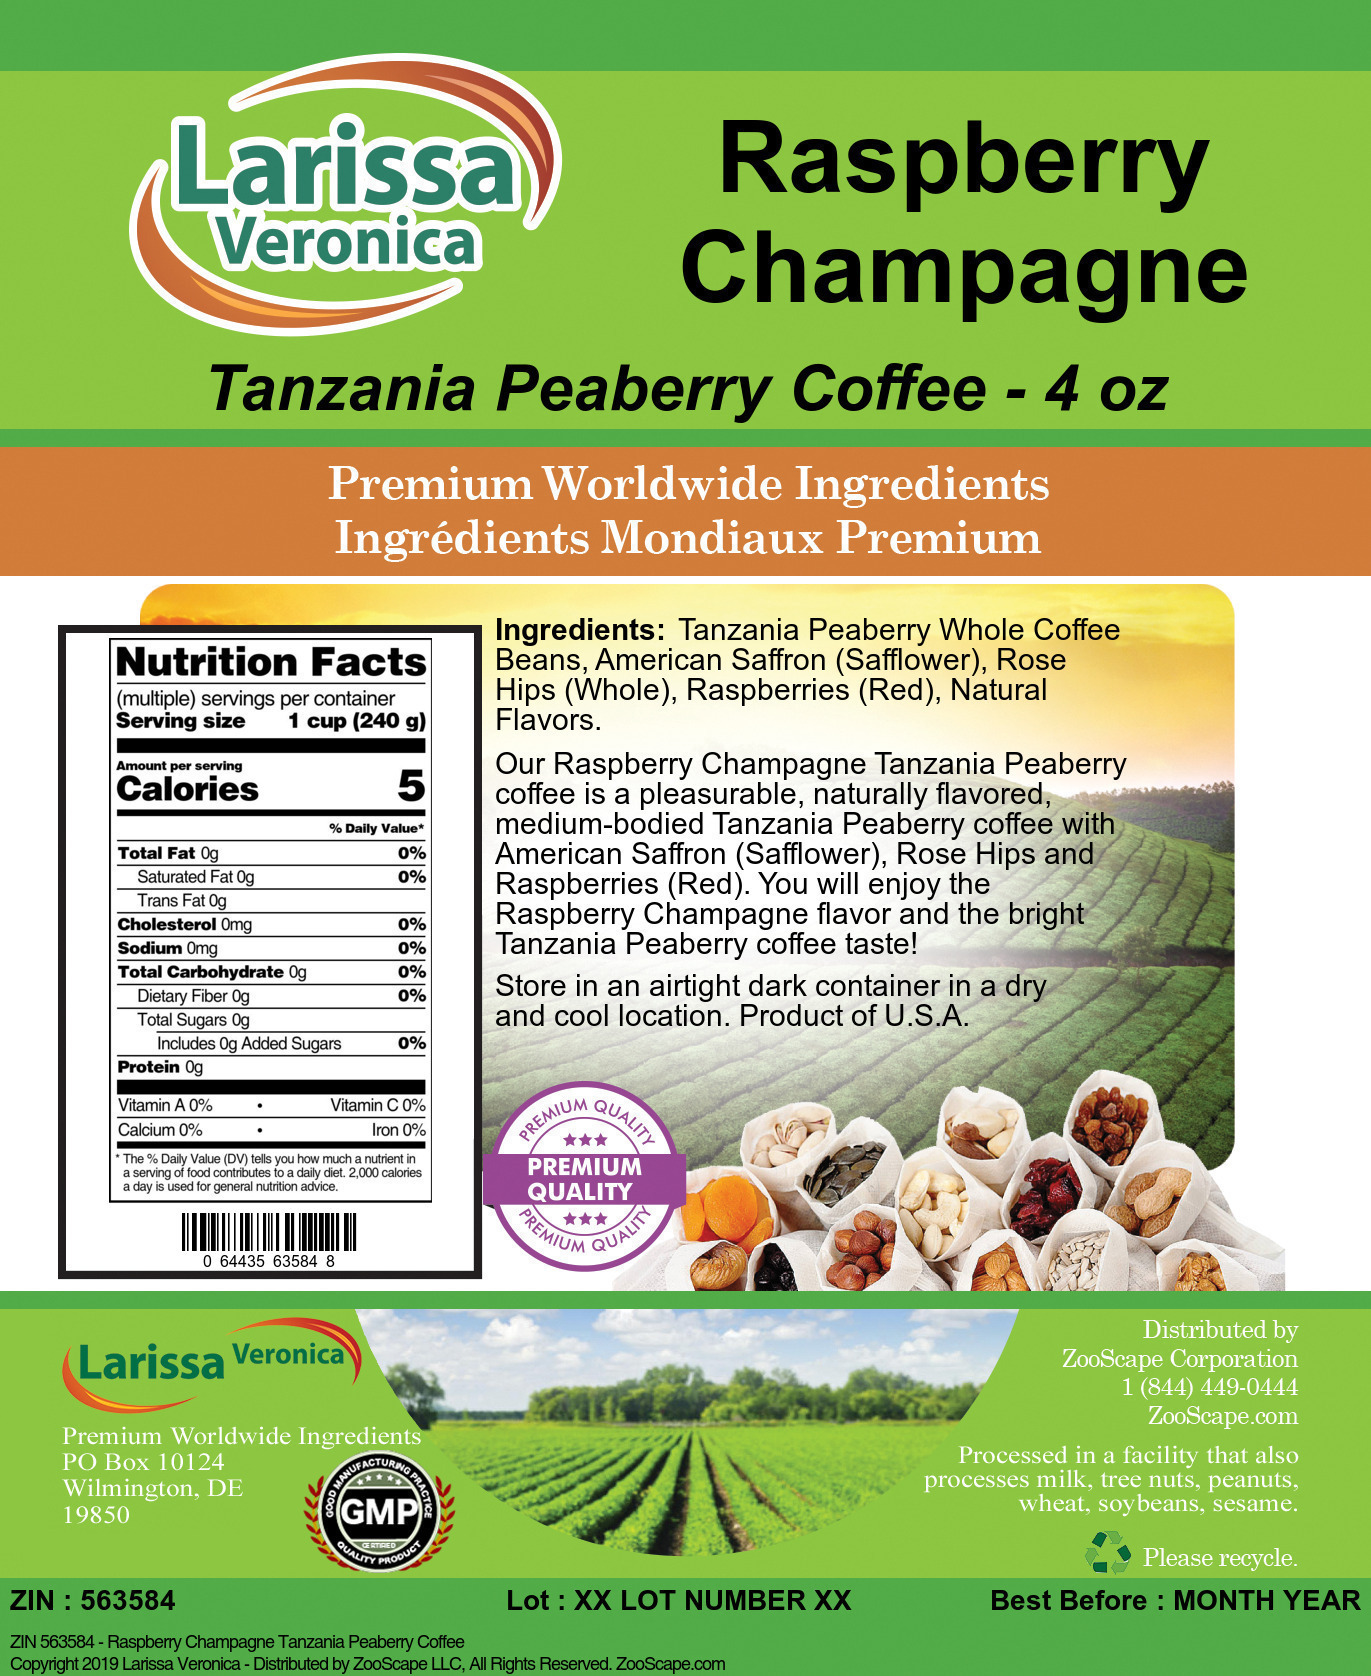 Raspberry Champagne Tanzania Peaberry Coffee - Label